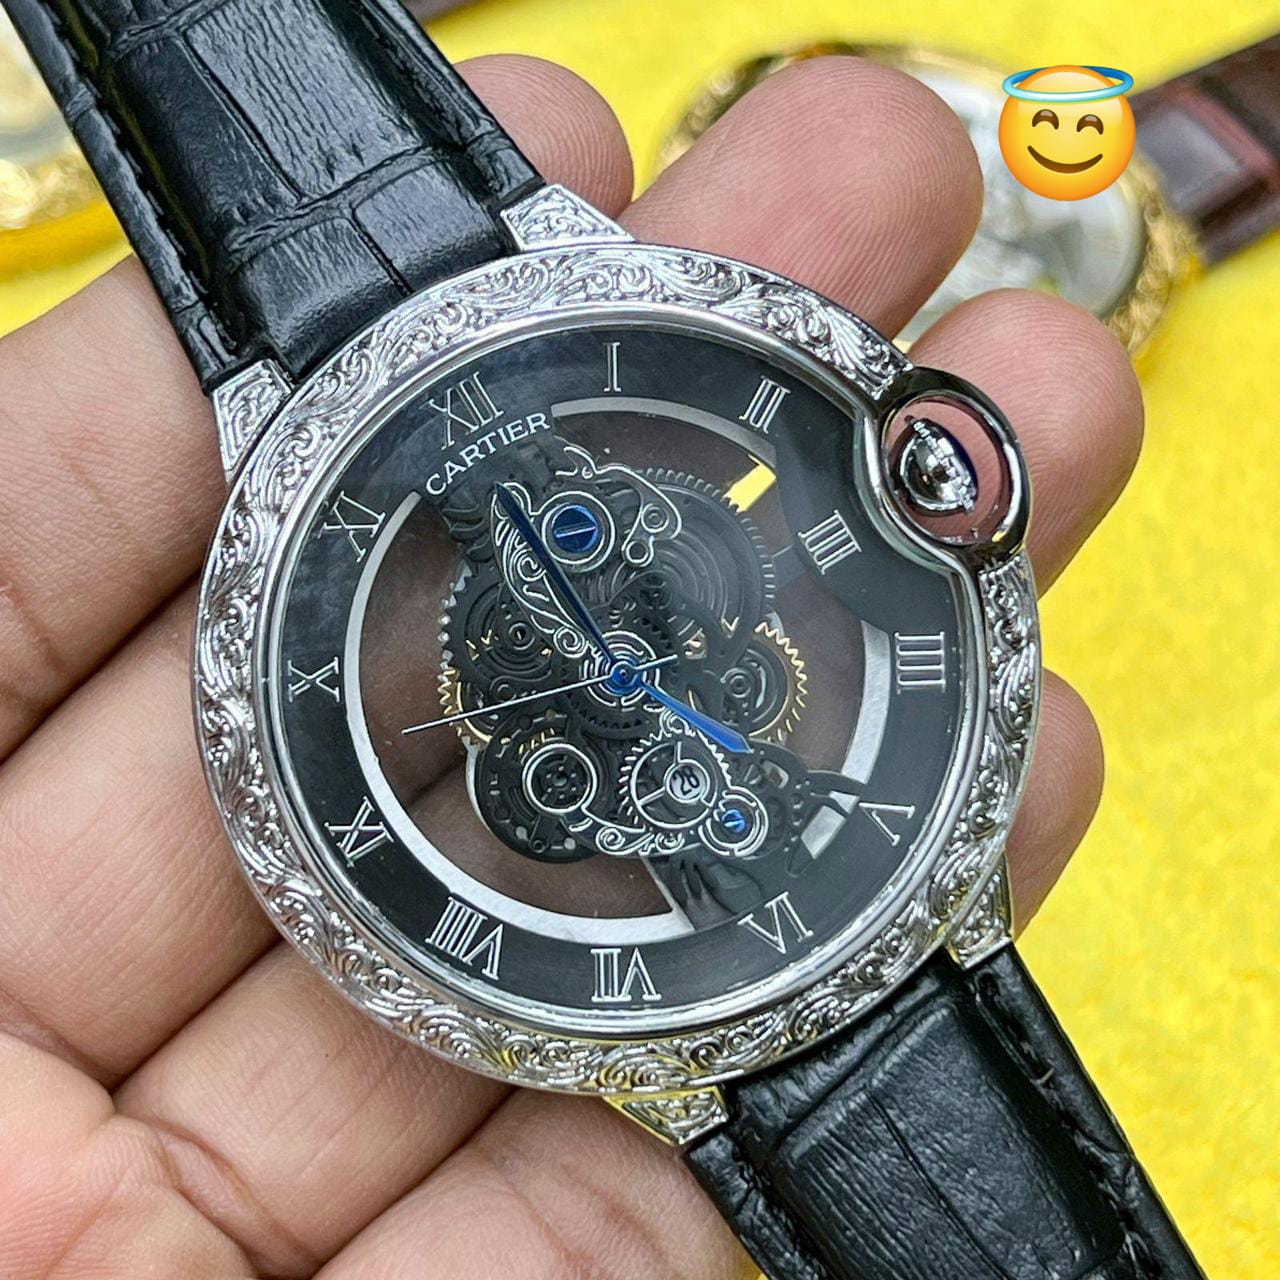 Cartier Bridge Edition Watch